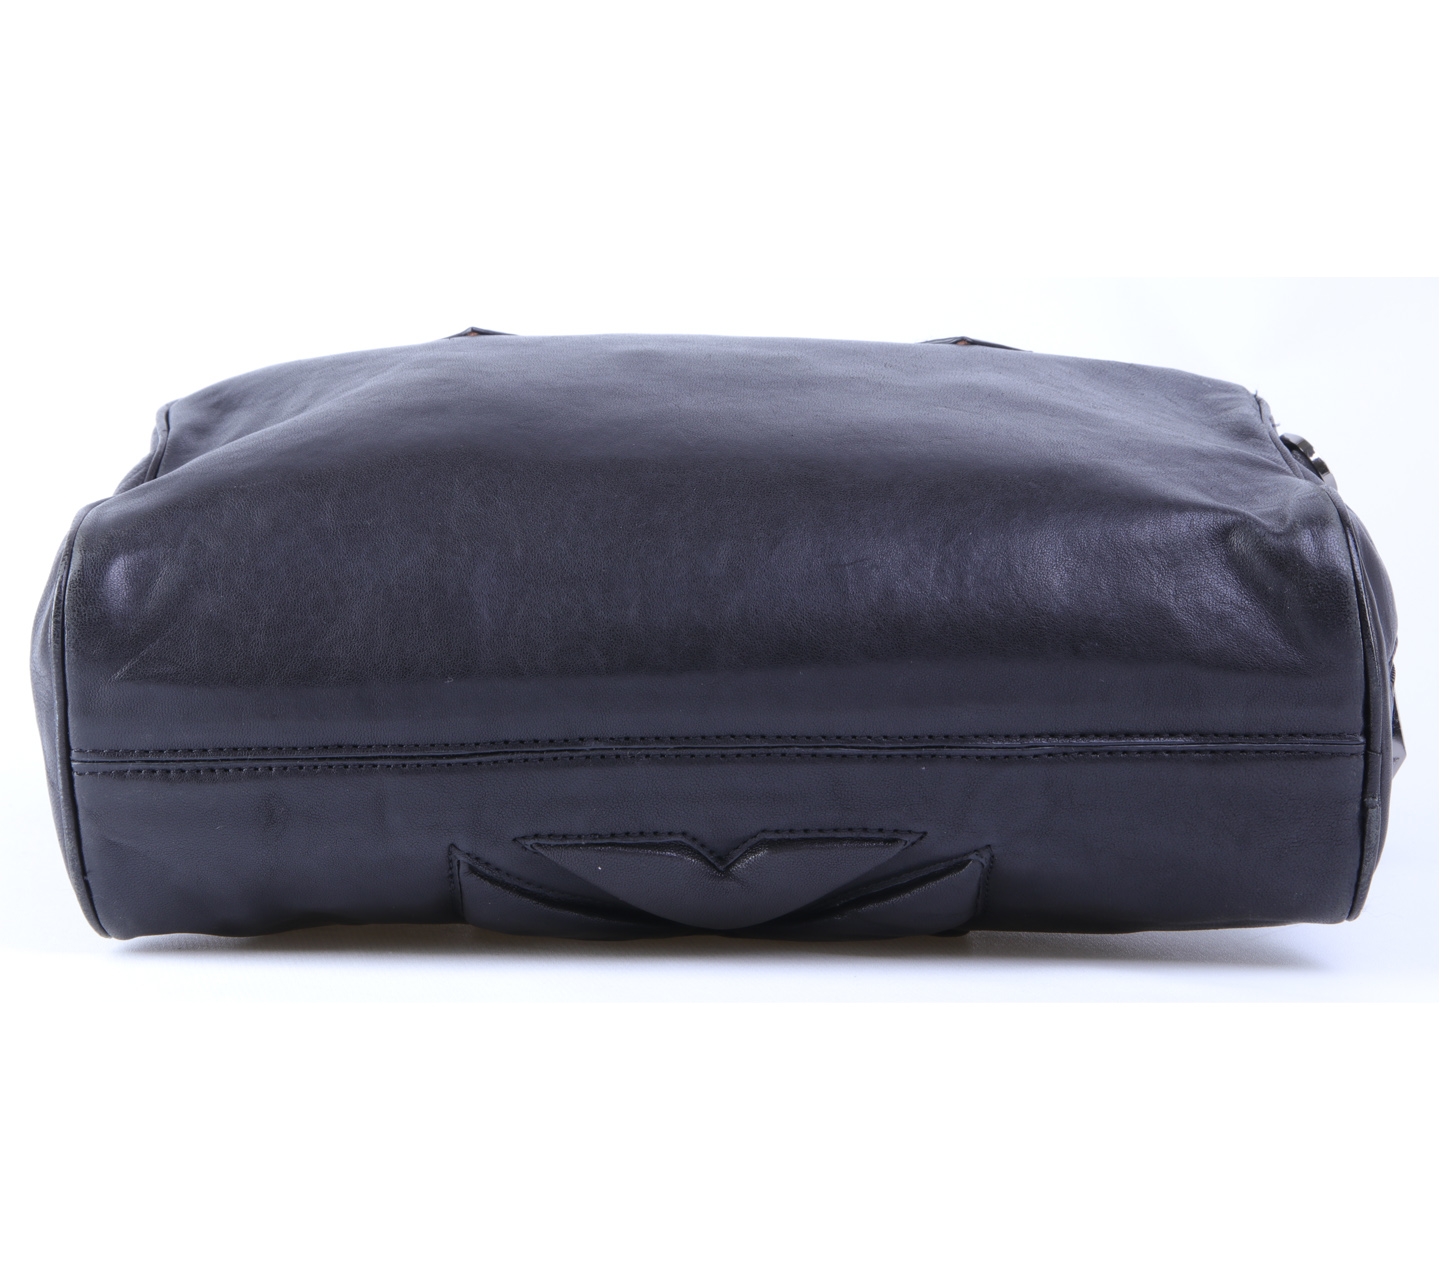 L.A.M.B Black Handbag